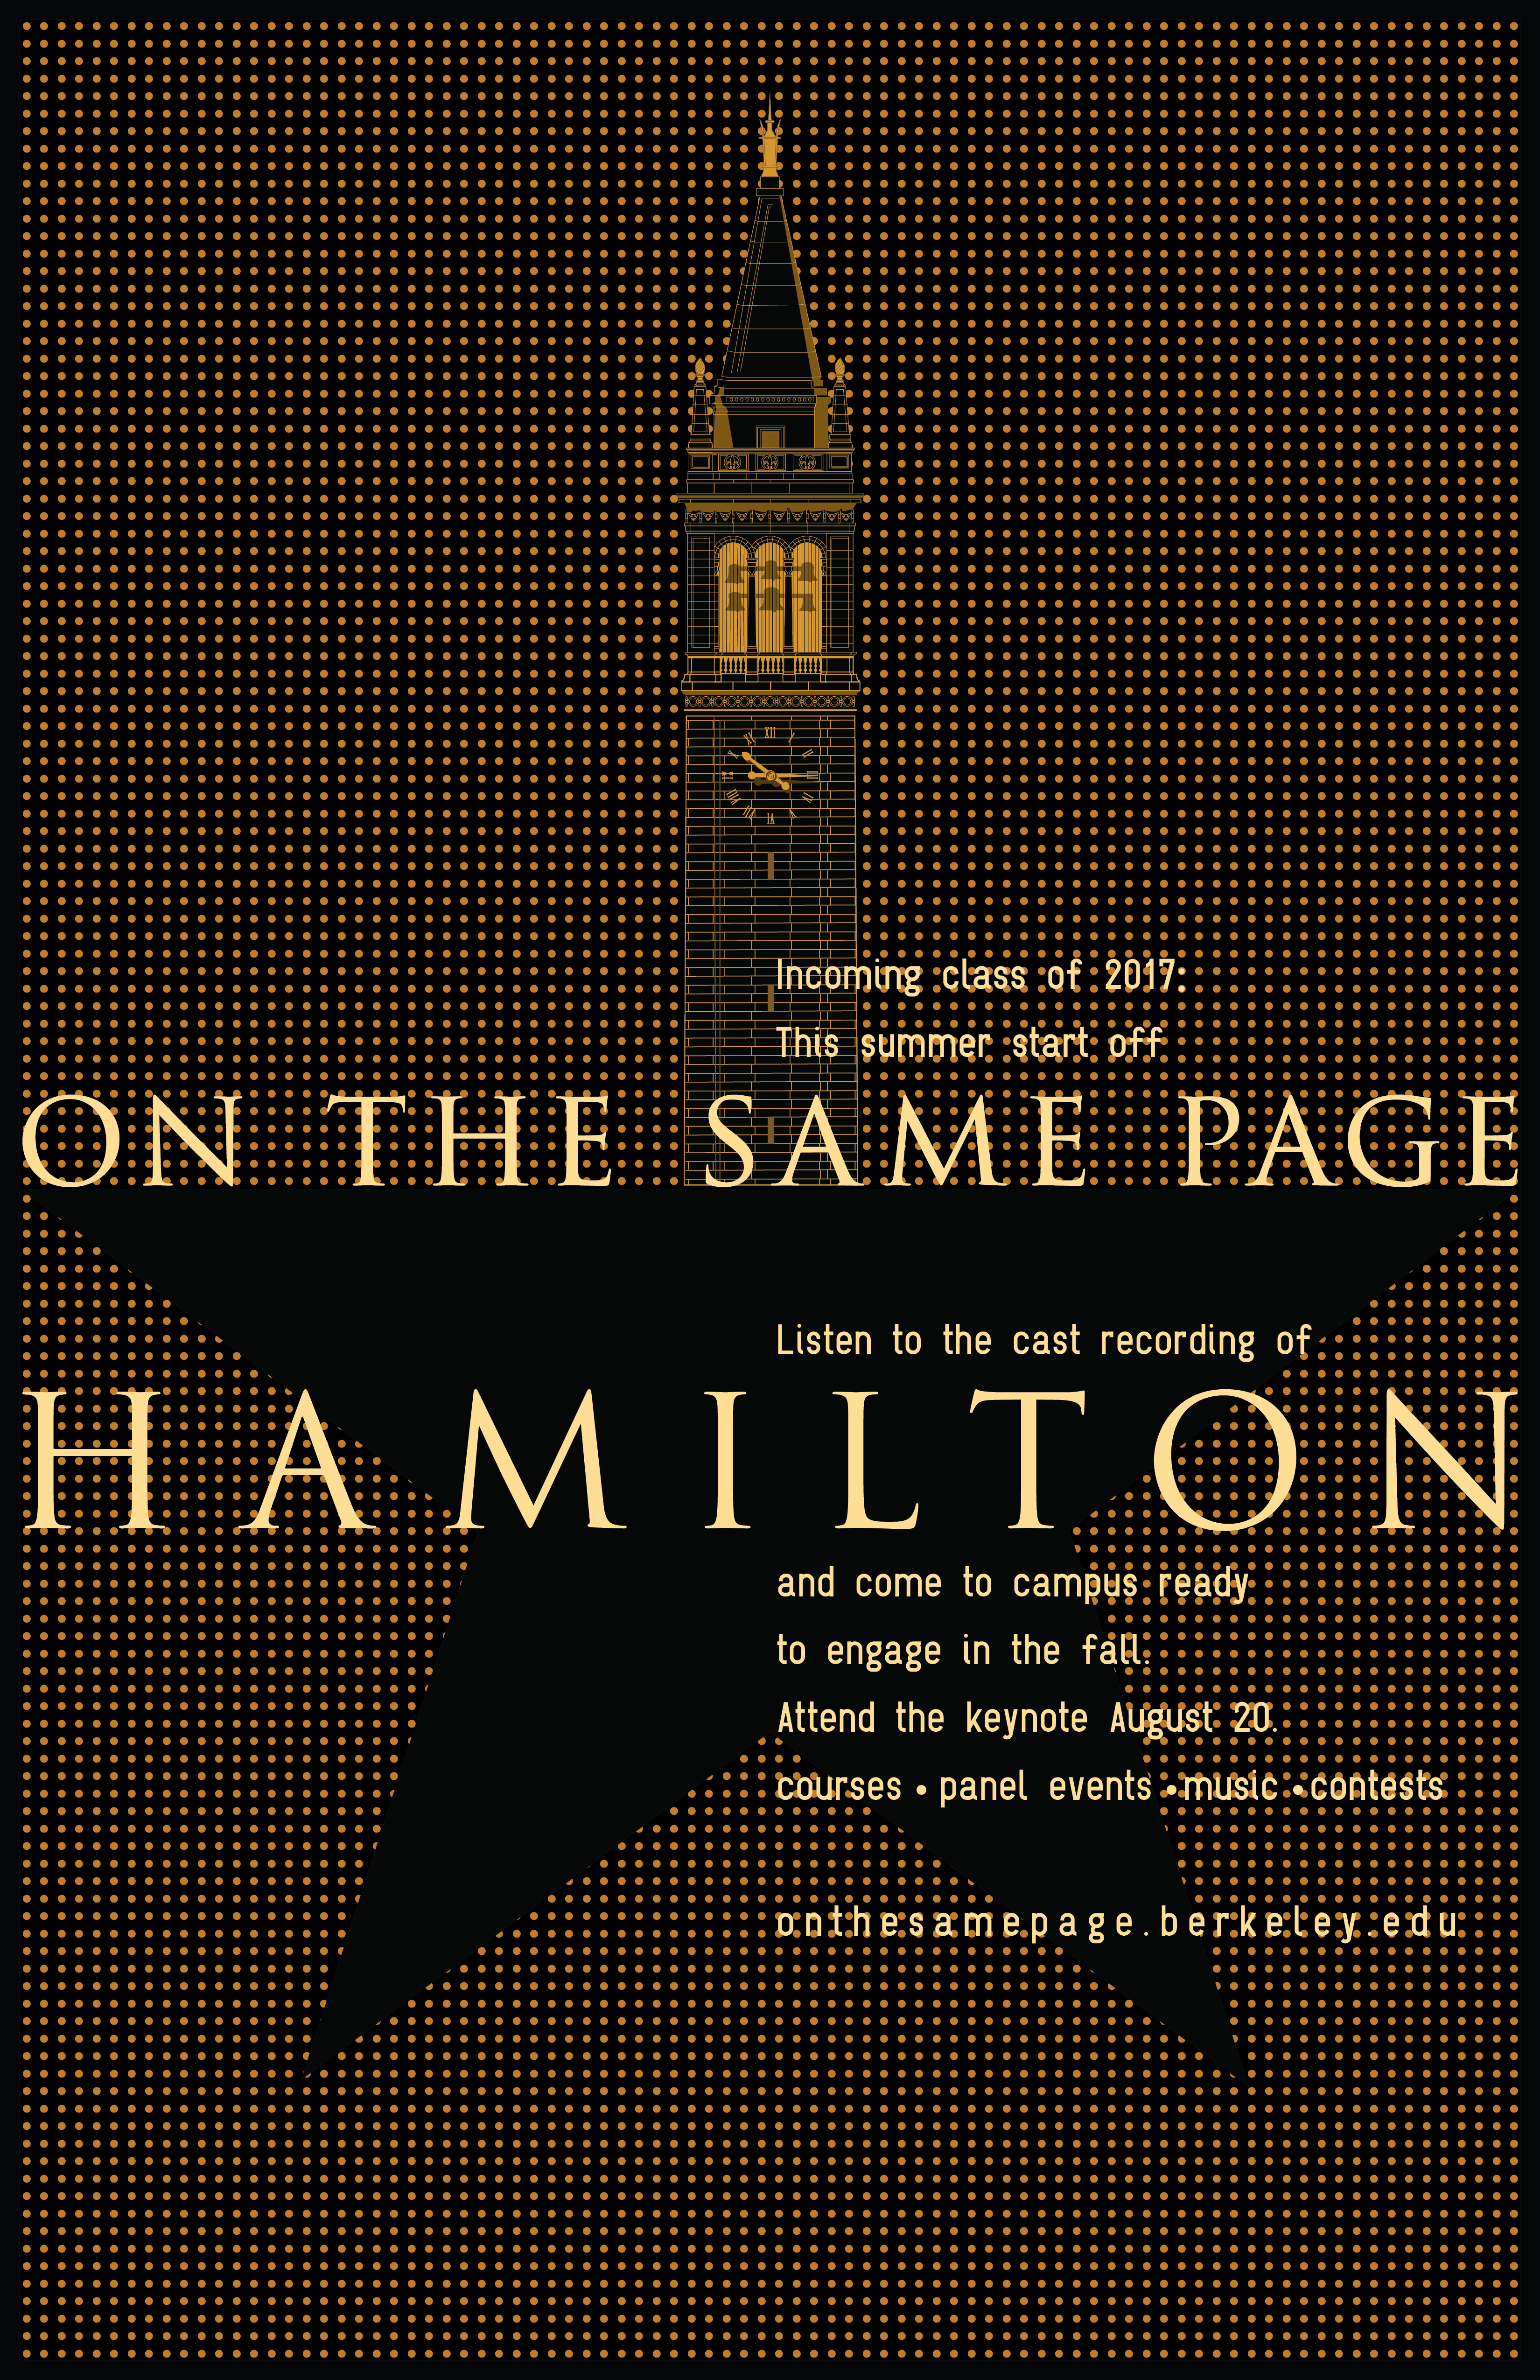 Hamilton Fall 2017 poster